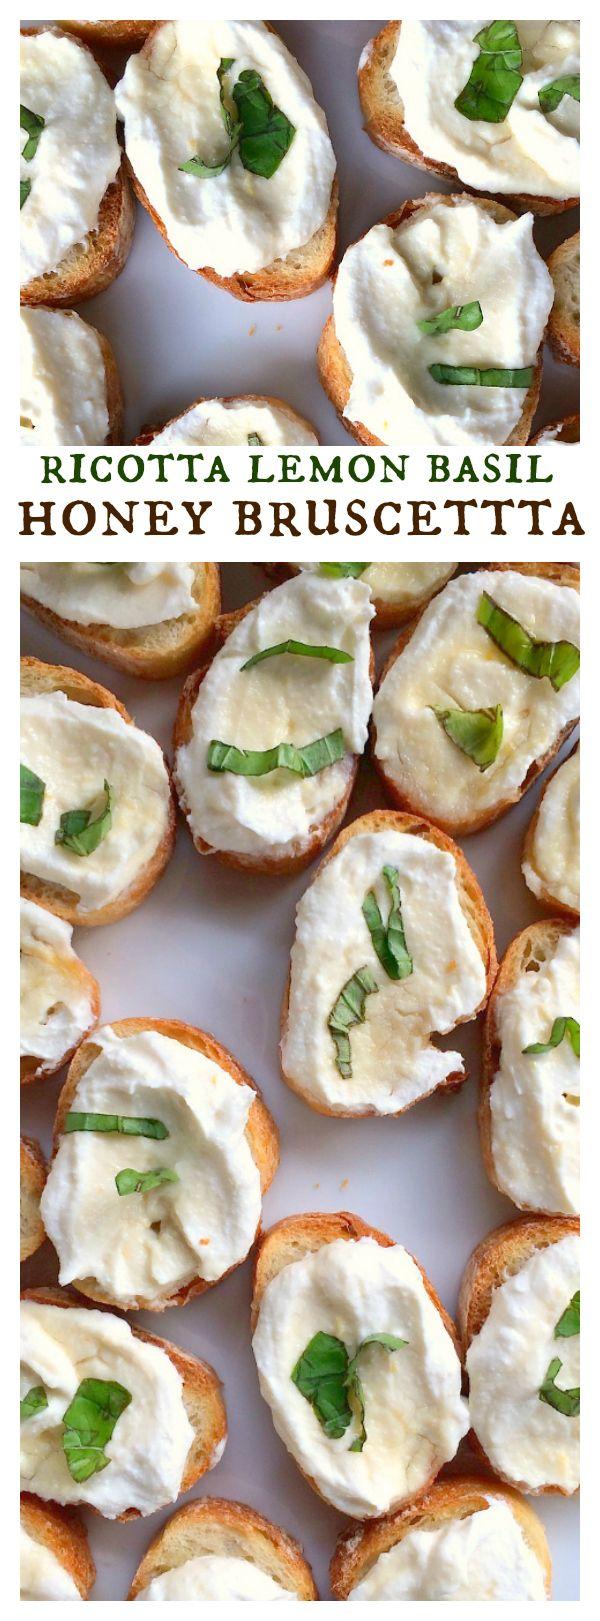 Wedding - Ricotta Lemon Basil Honey Bruschetta